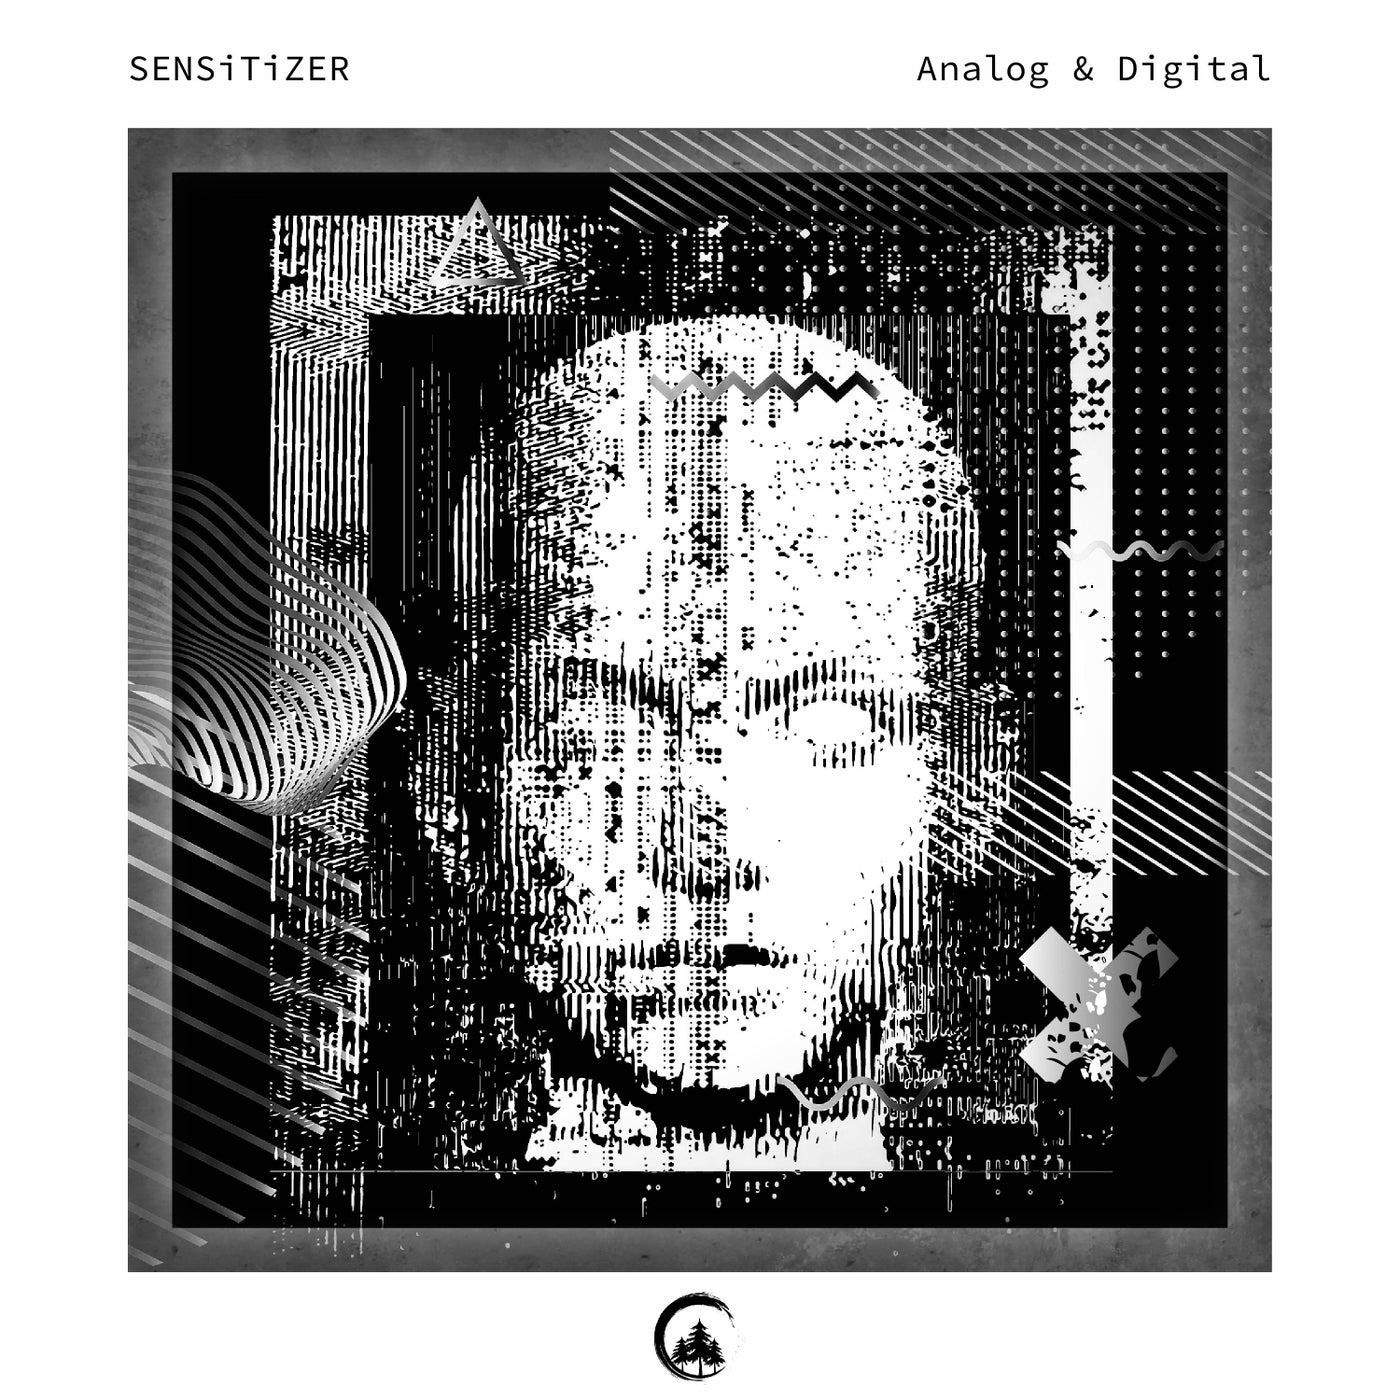 Analog & Digital